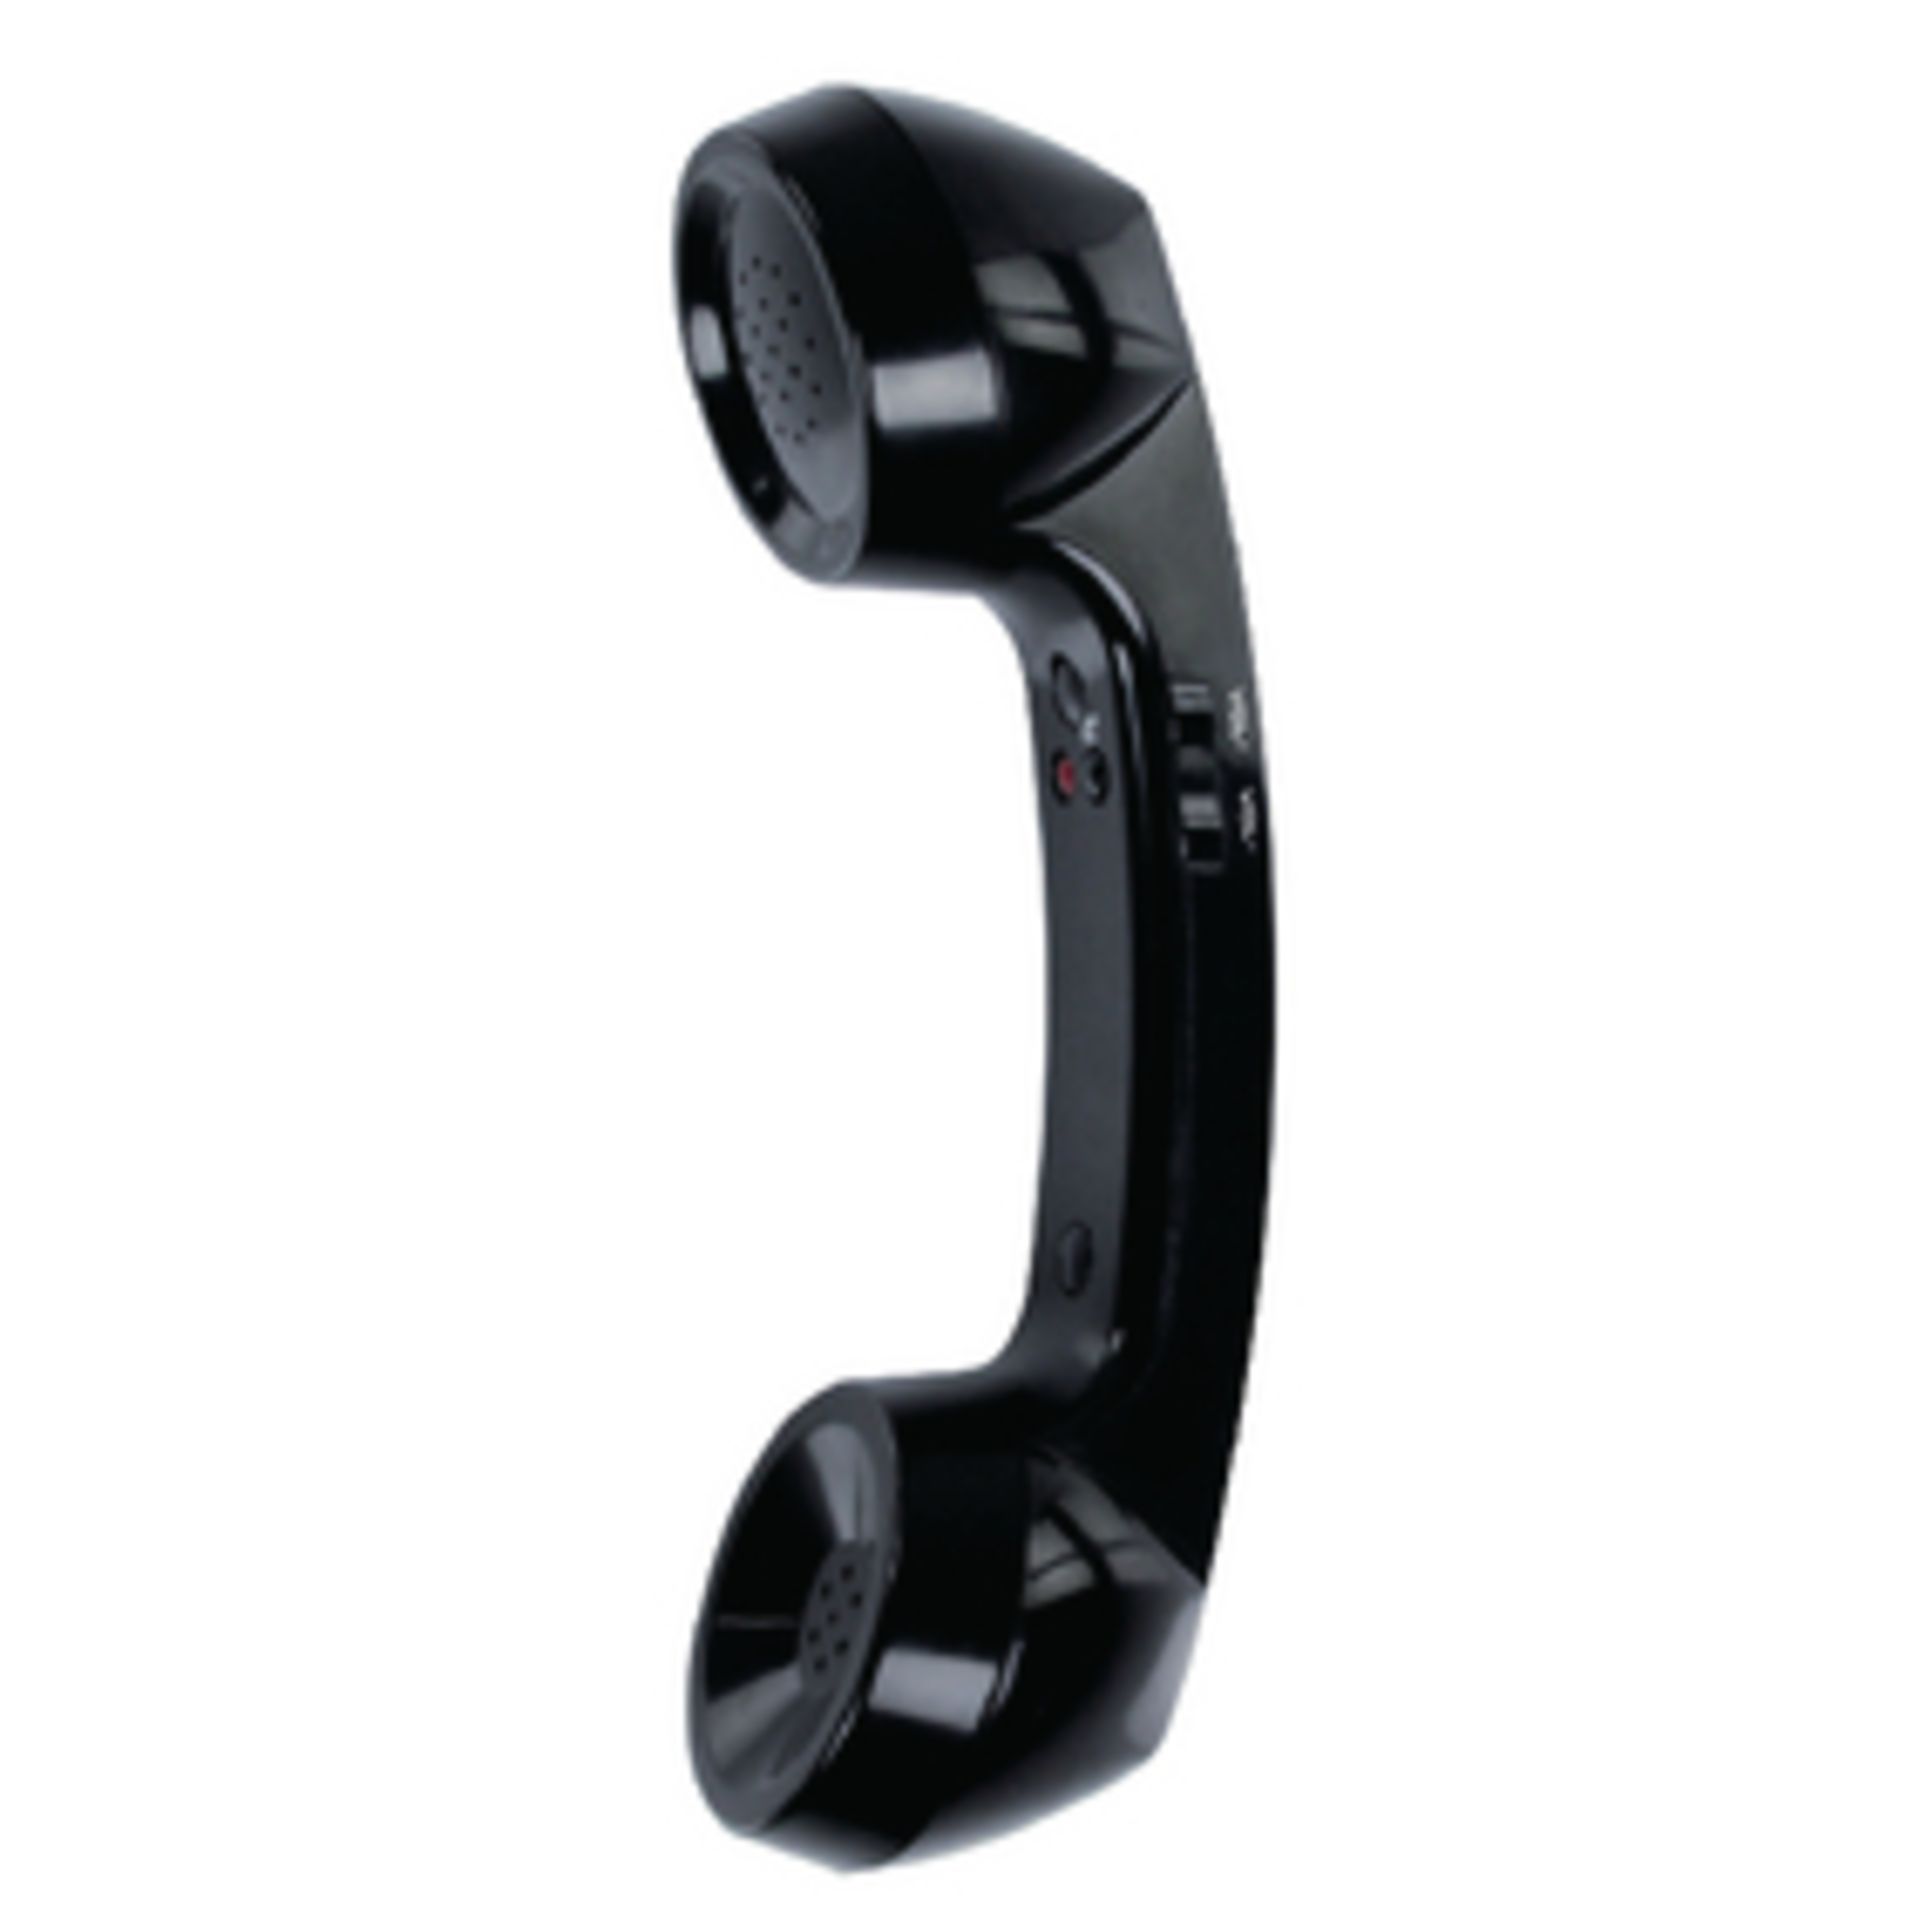 V Brand New BasicXL Bluetooth Retro Telephone Handset RRP 19.99 X 2 YOUR BID PRICE TO BE